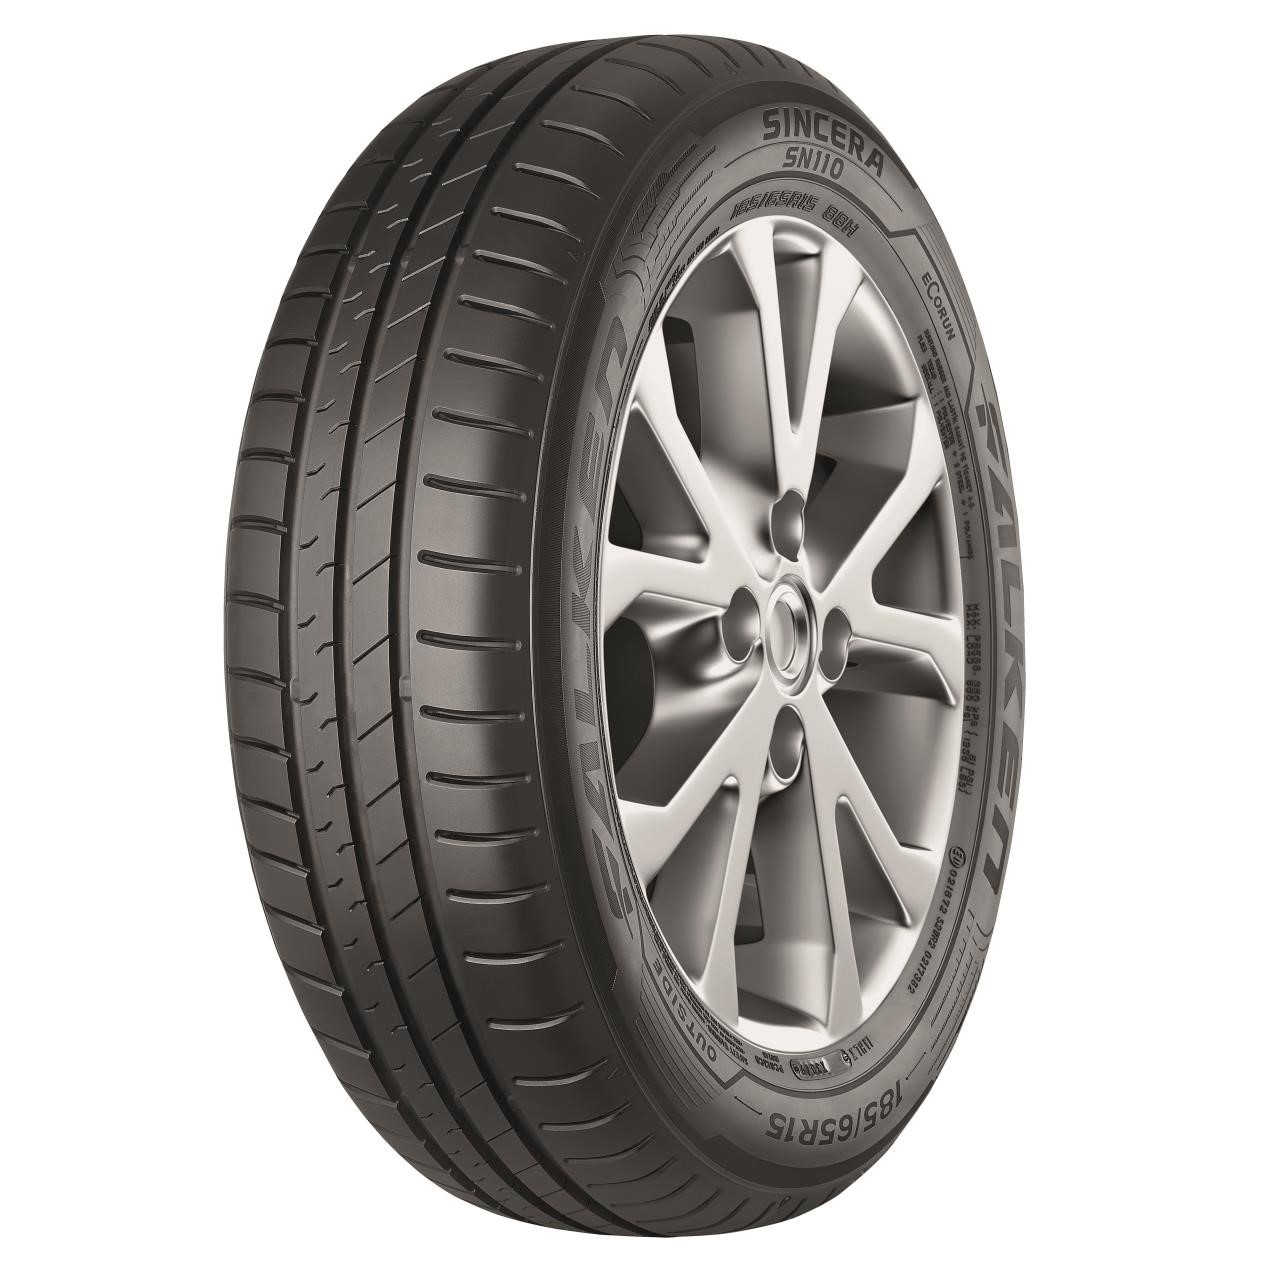 Falken Sincera SN110 Ecorun - Reviews Tests Tire and